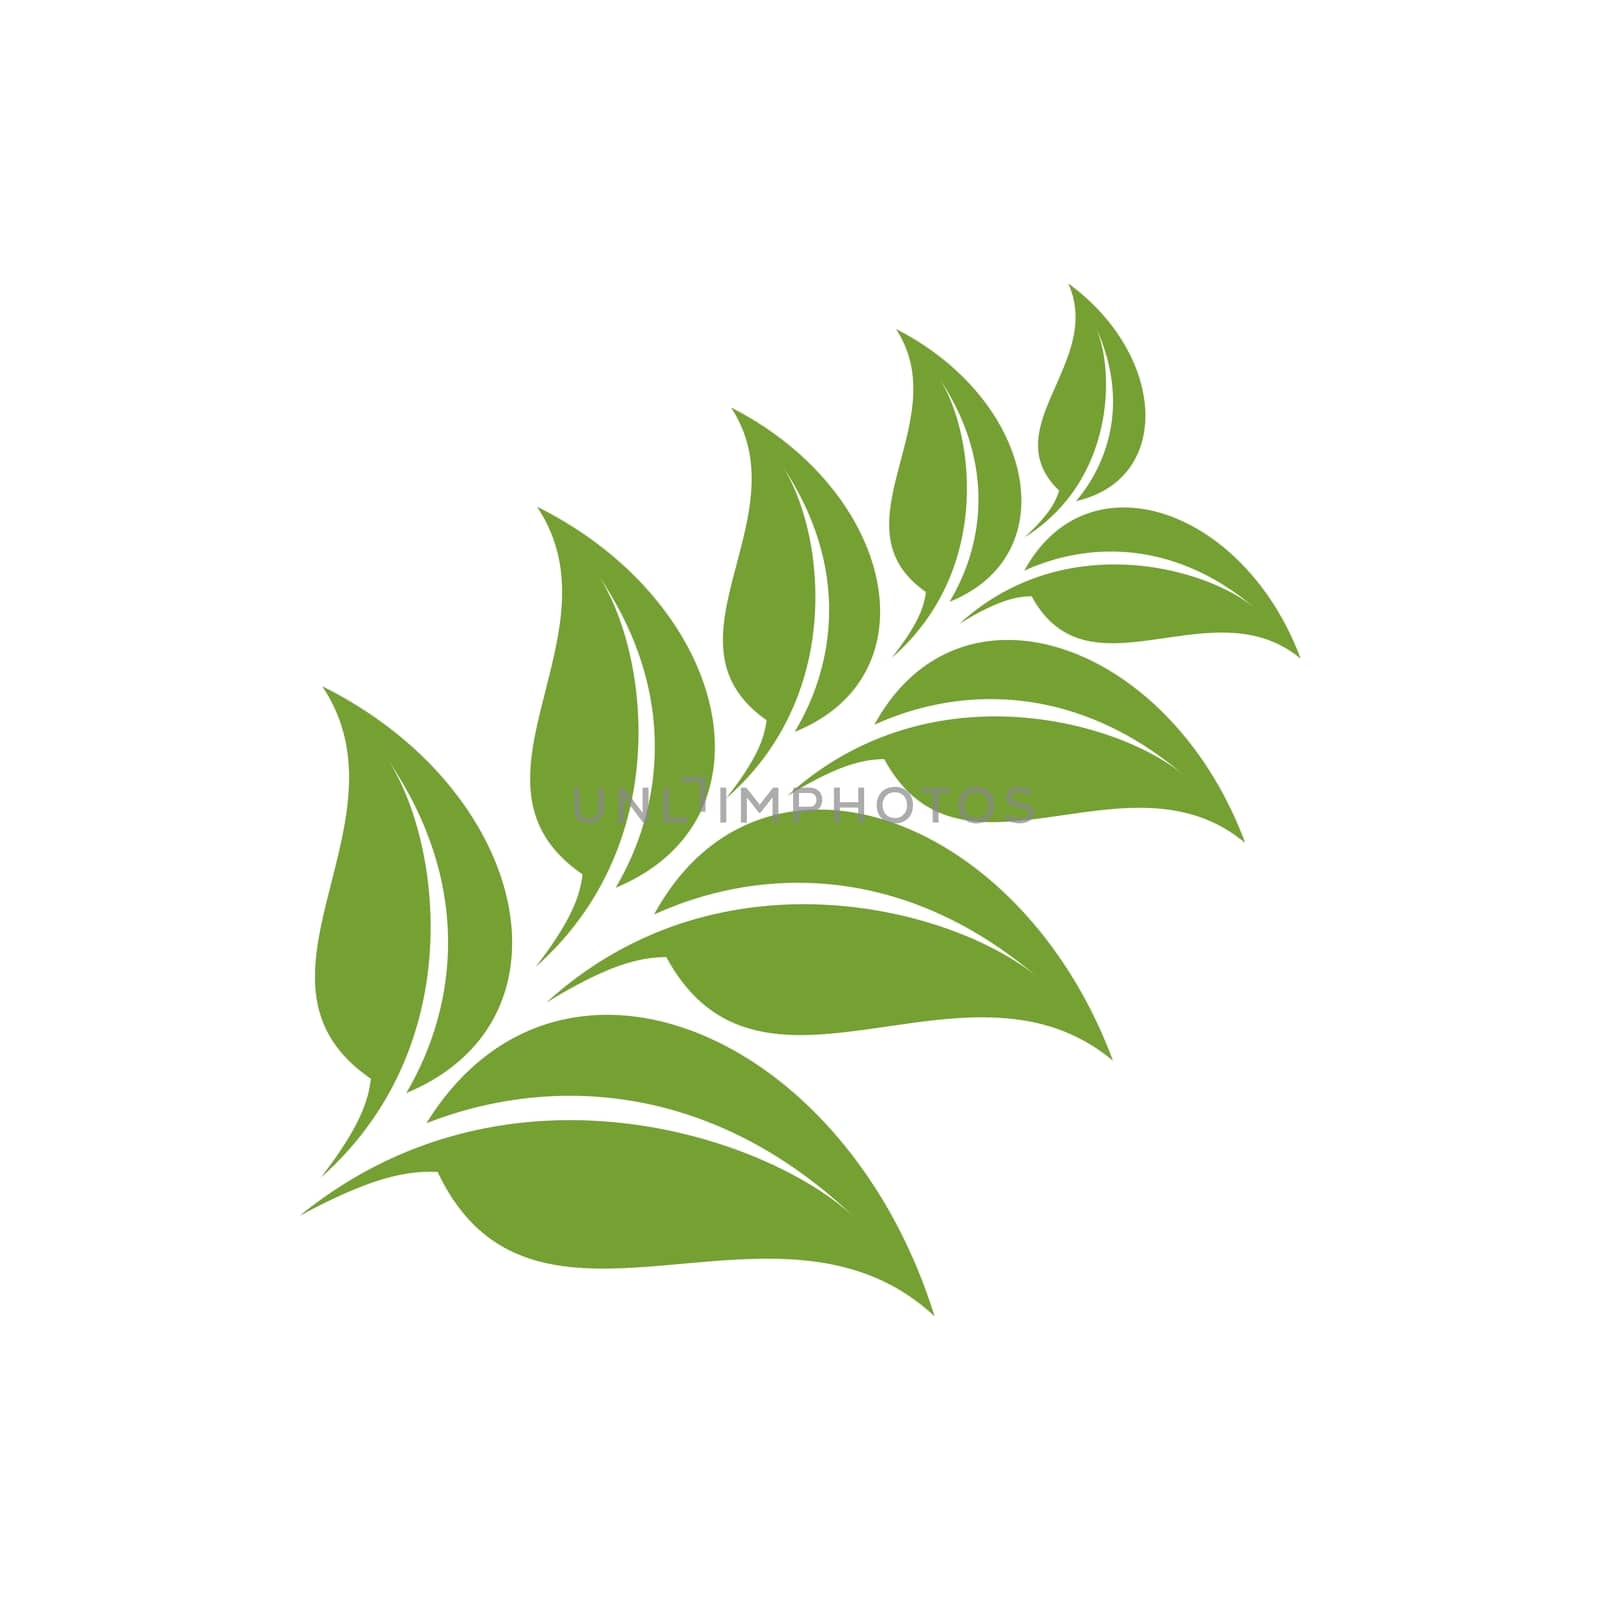 Green Leaf Ecology Logo Template Illustration Design. Vector EPS 10. by soponyono